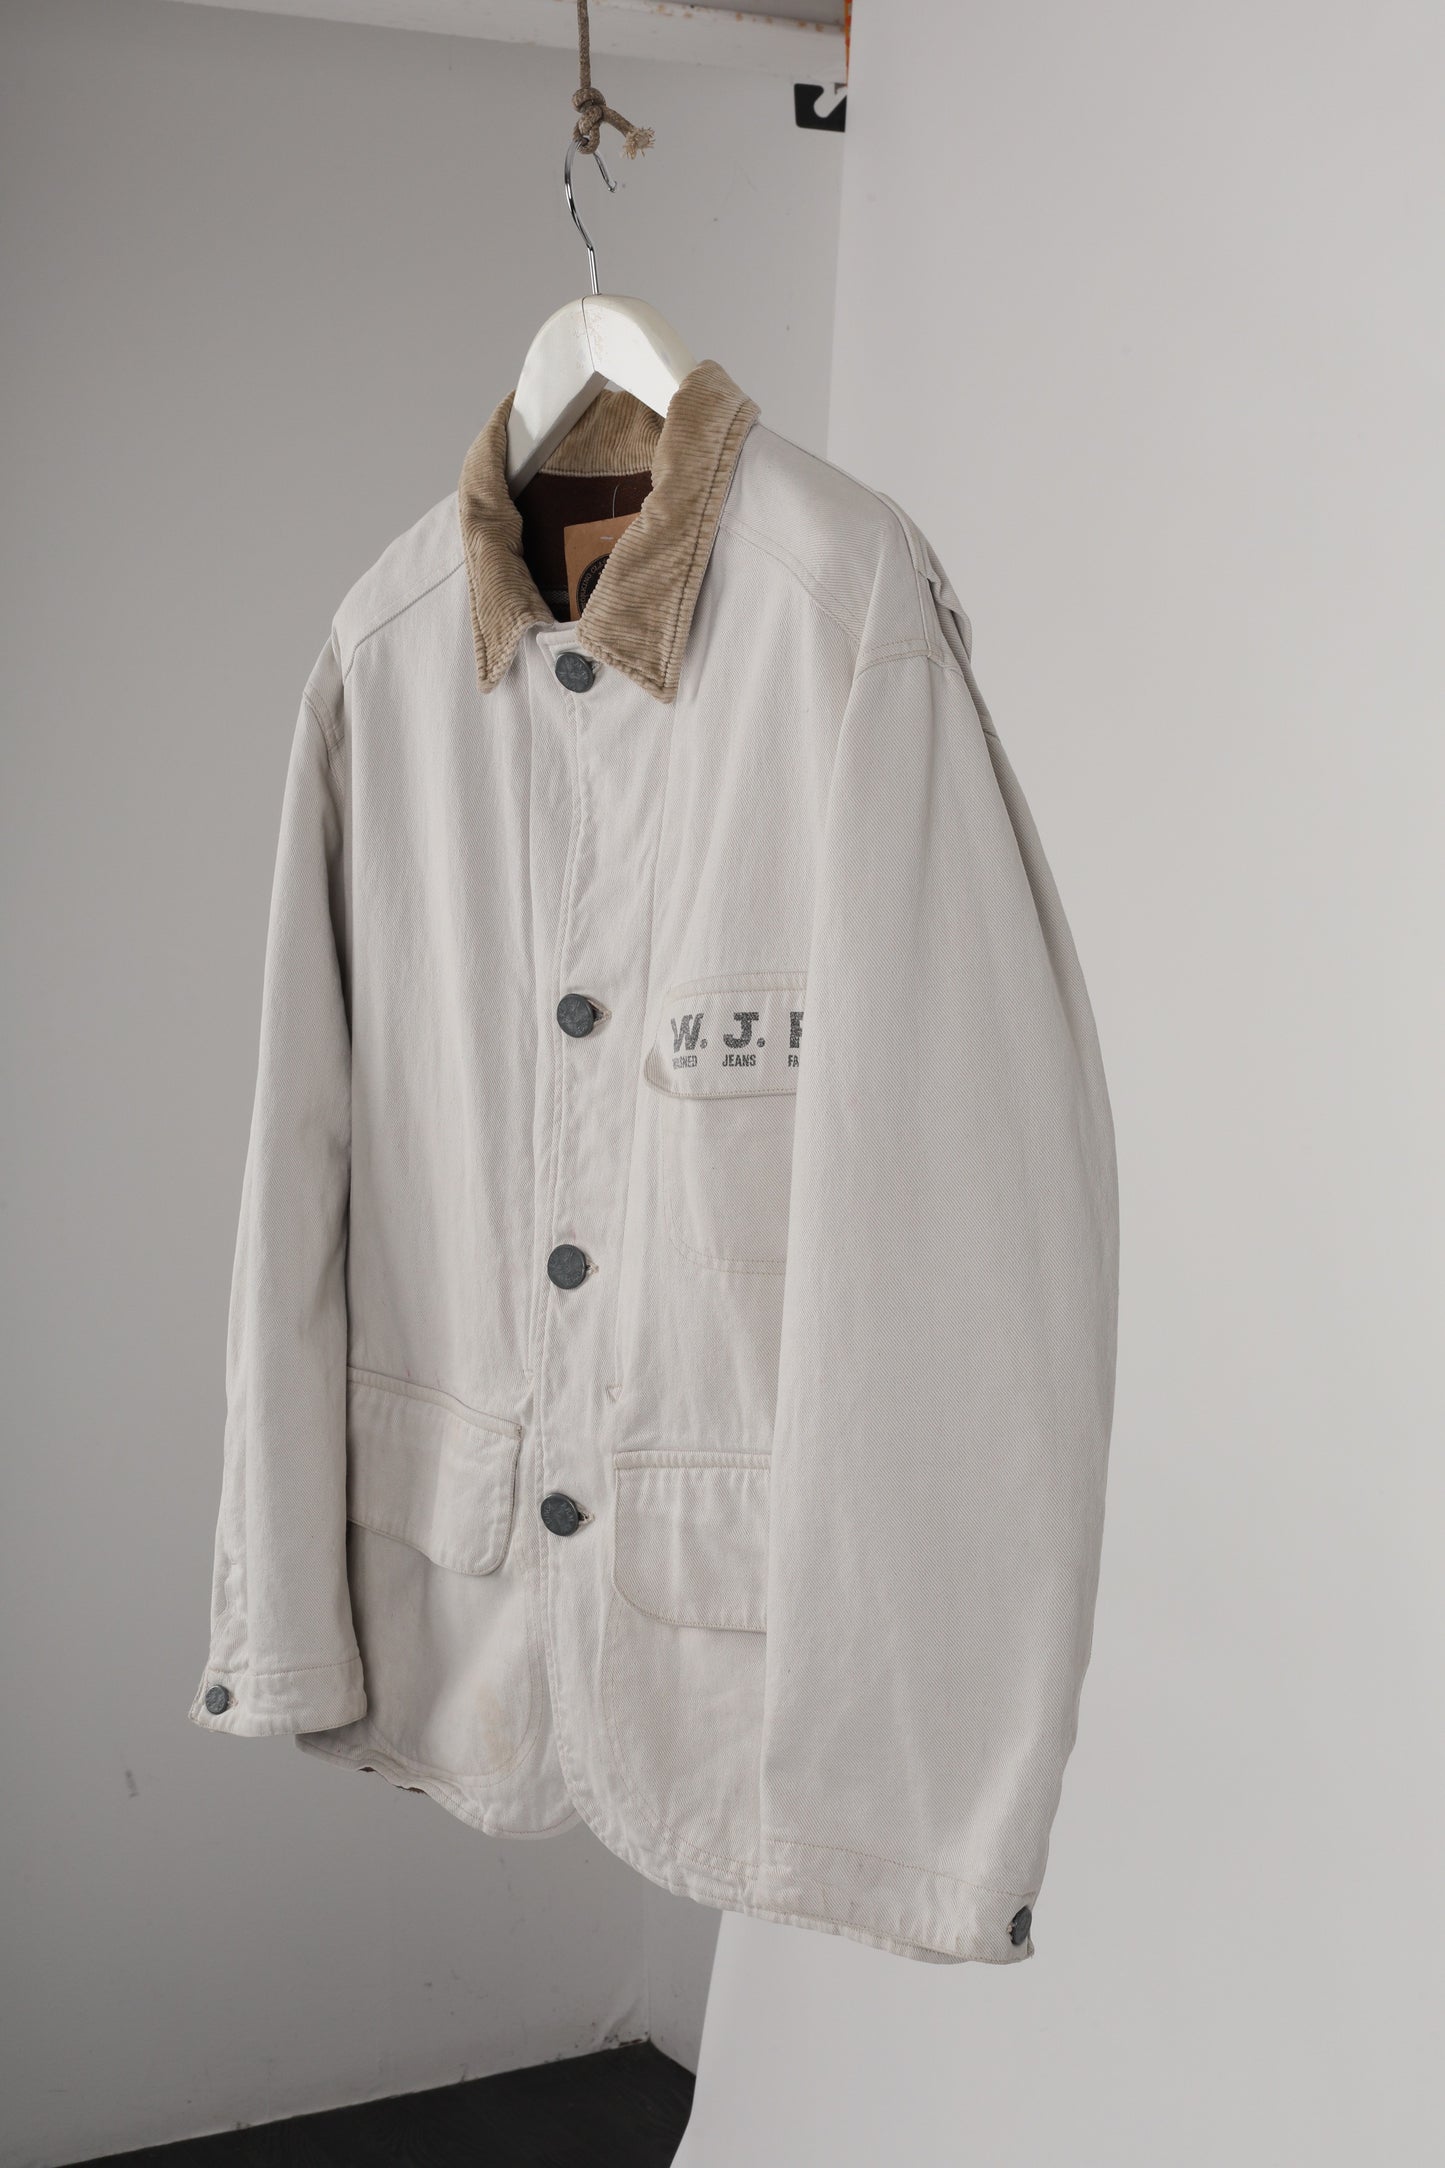 1993 Armani Jeans W.J.F Blanket lined chore jacket